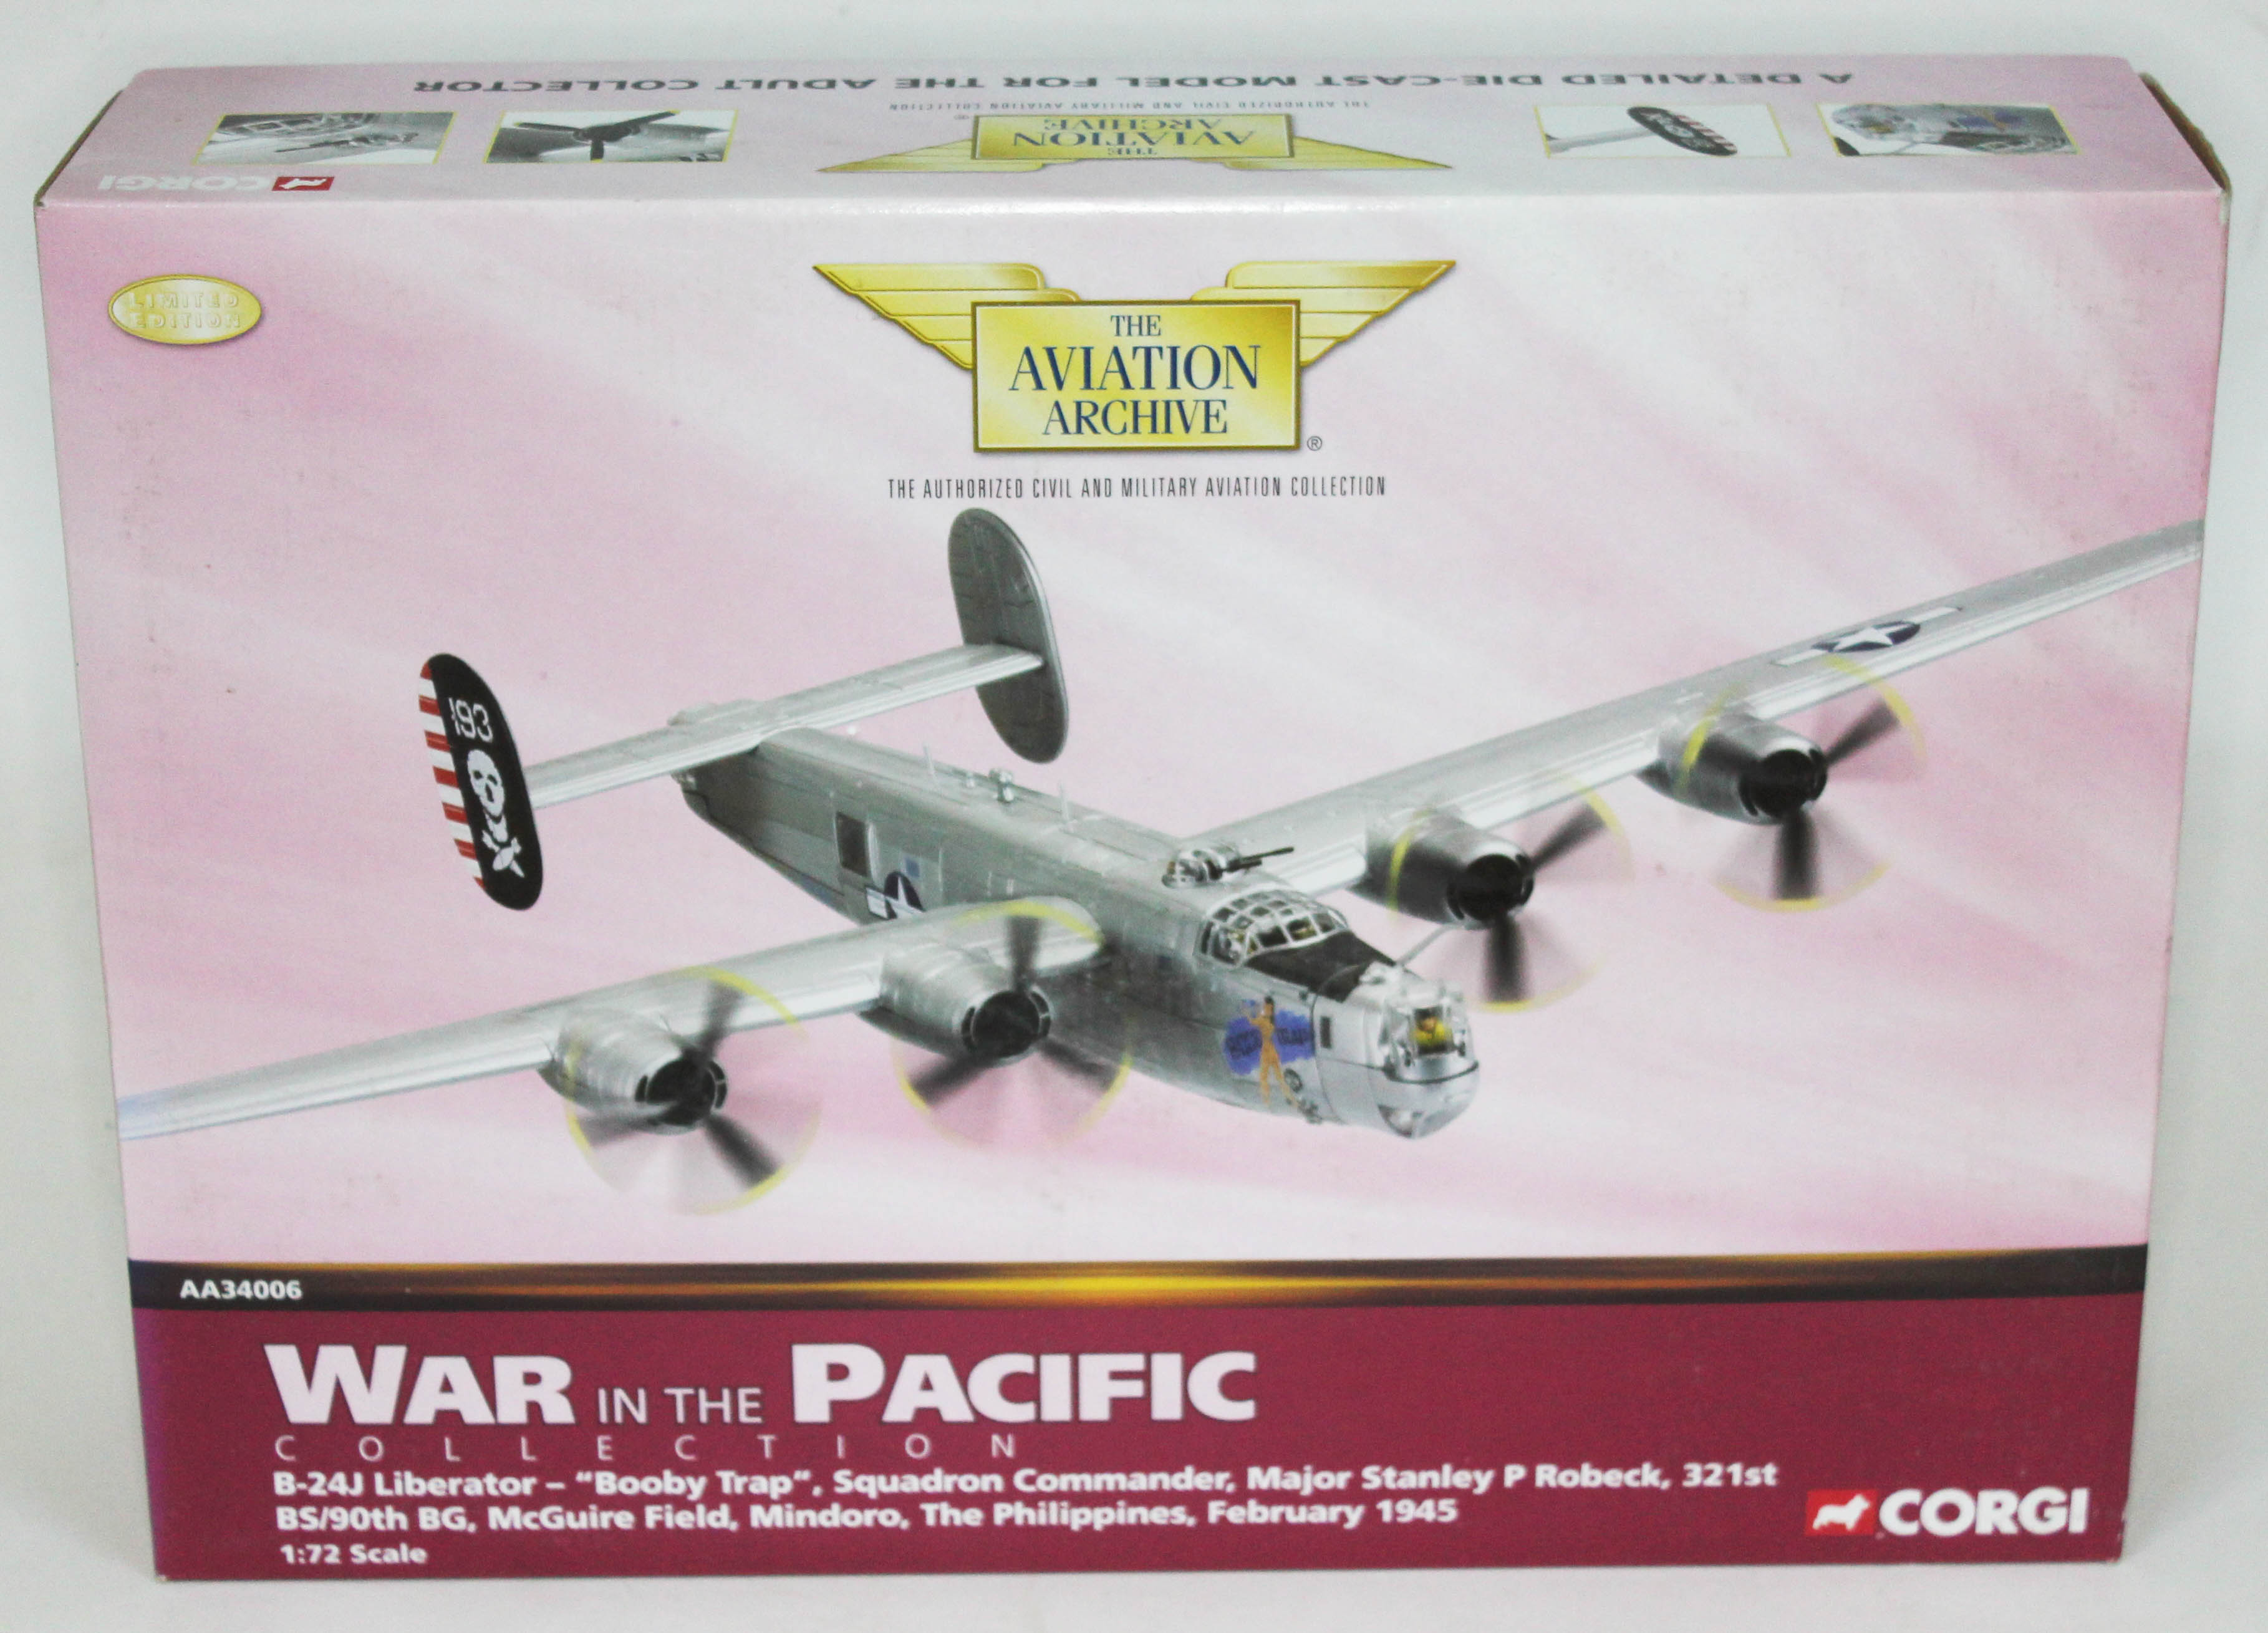 Corgi The Aviation Archive War in the Pacific Collection B-24J Liberator - "Booby Trap", Squadron